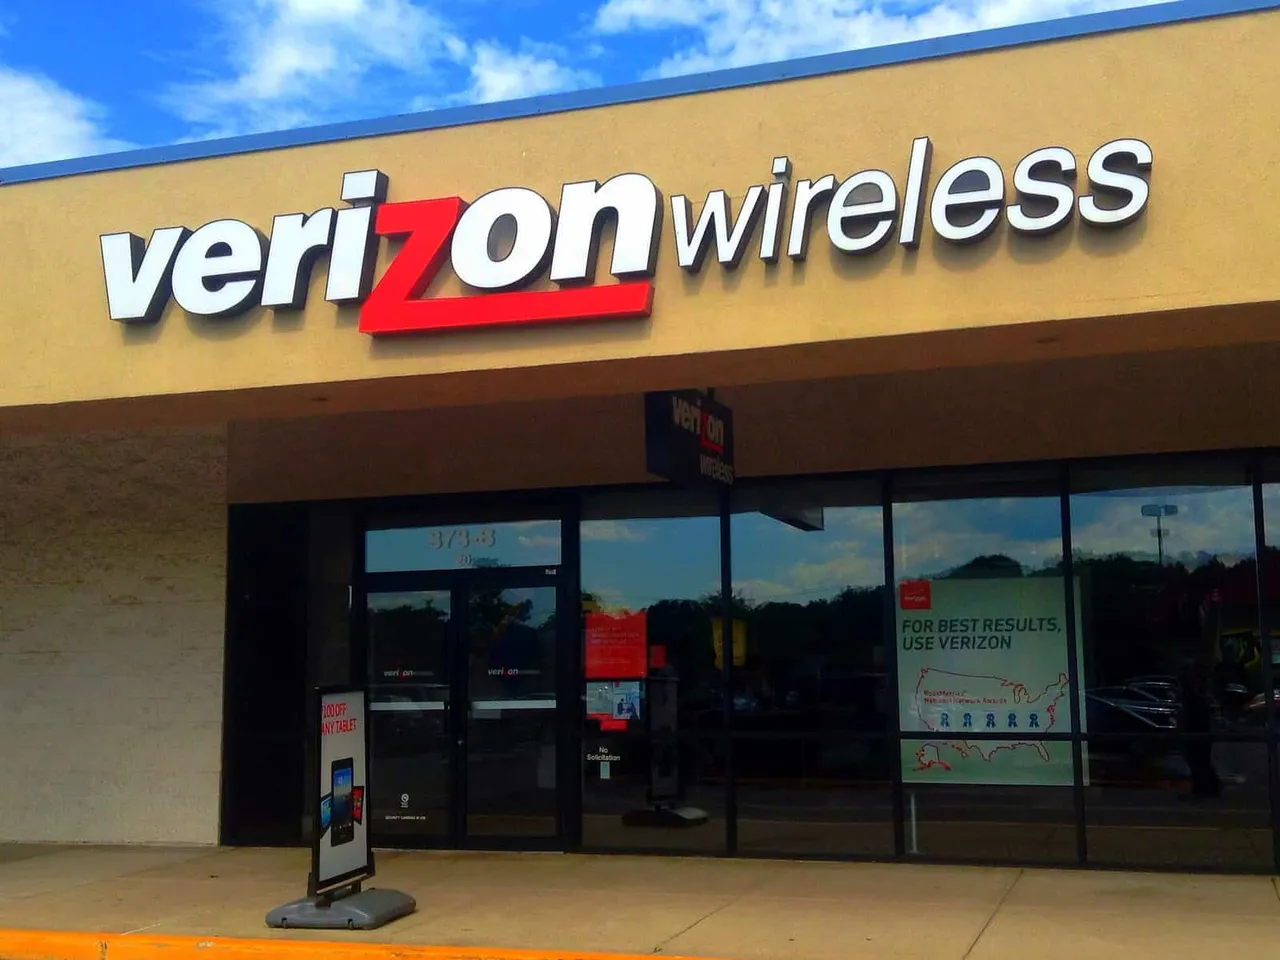 America’s most reliable wireless network Verizon